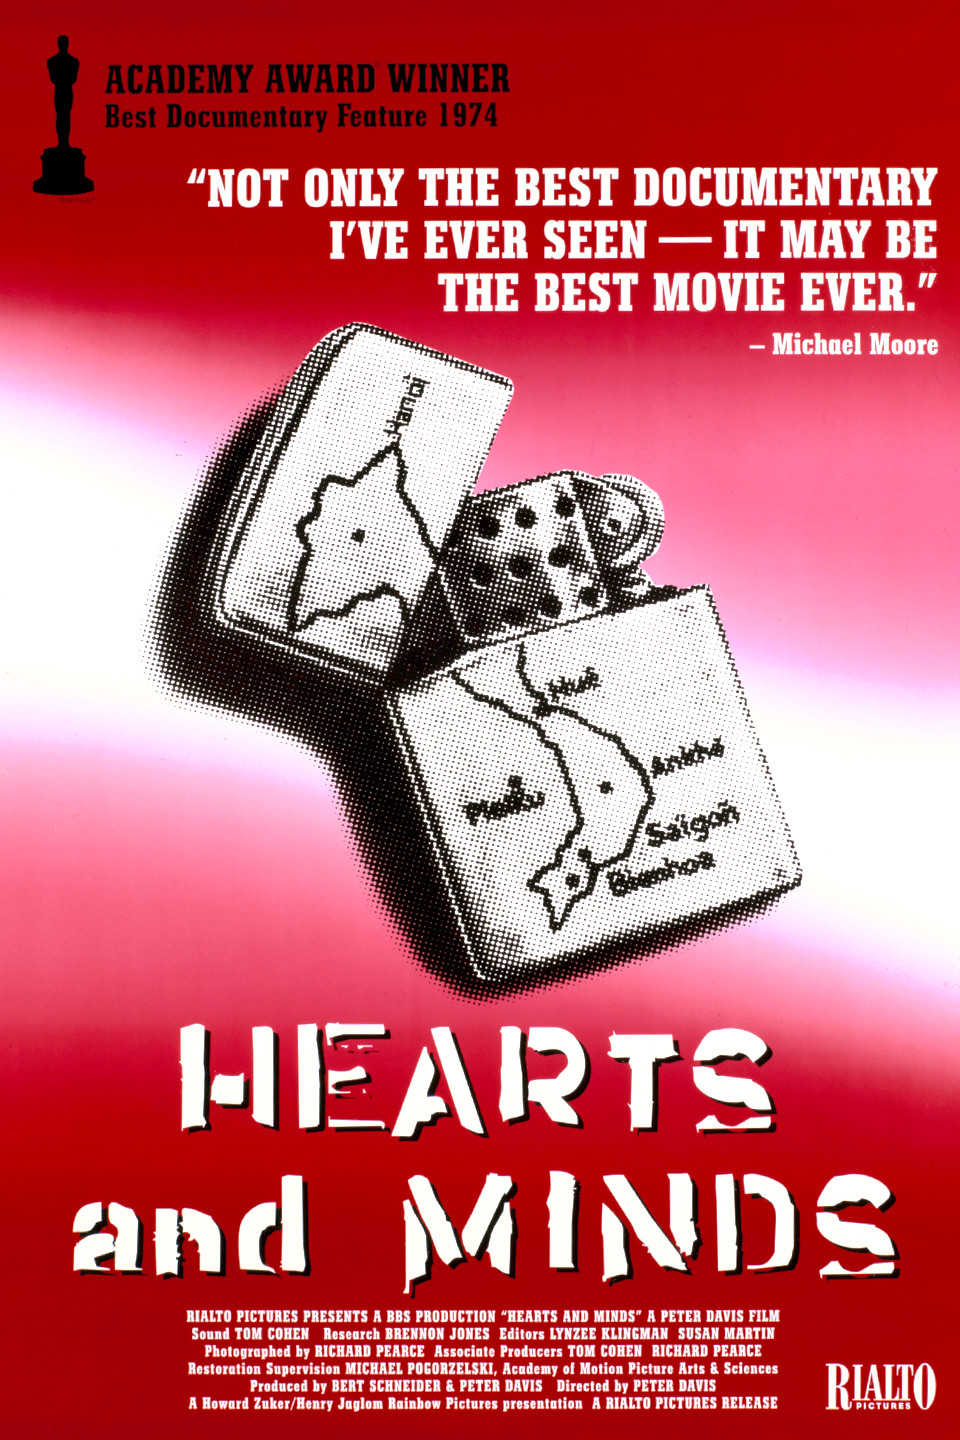 Nonton film Hearts and Minds layarkaca21 indoxx1 ganool online streaming terbaru